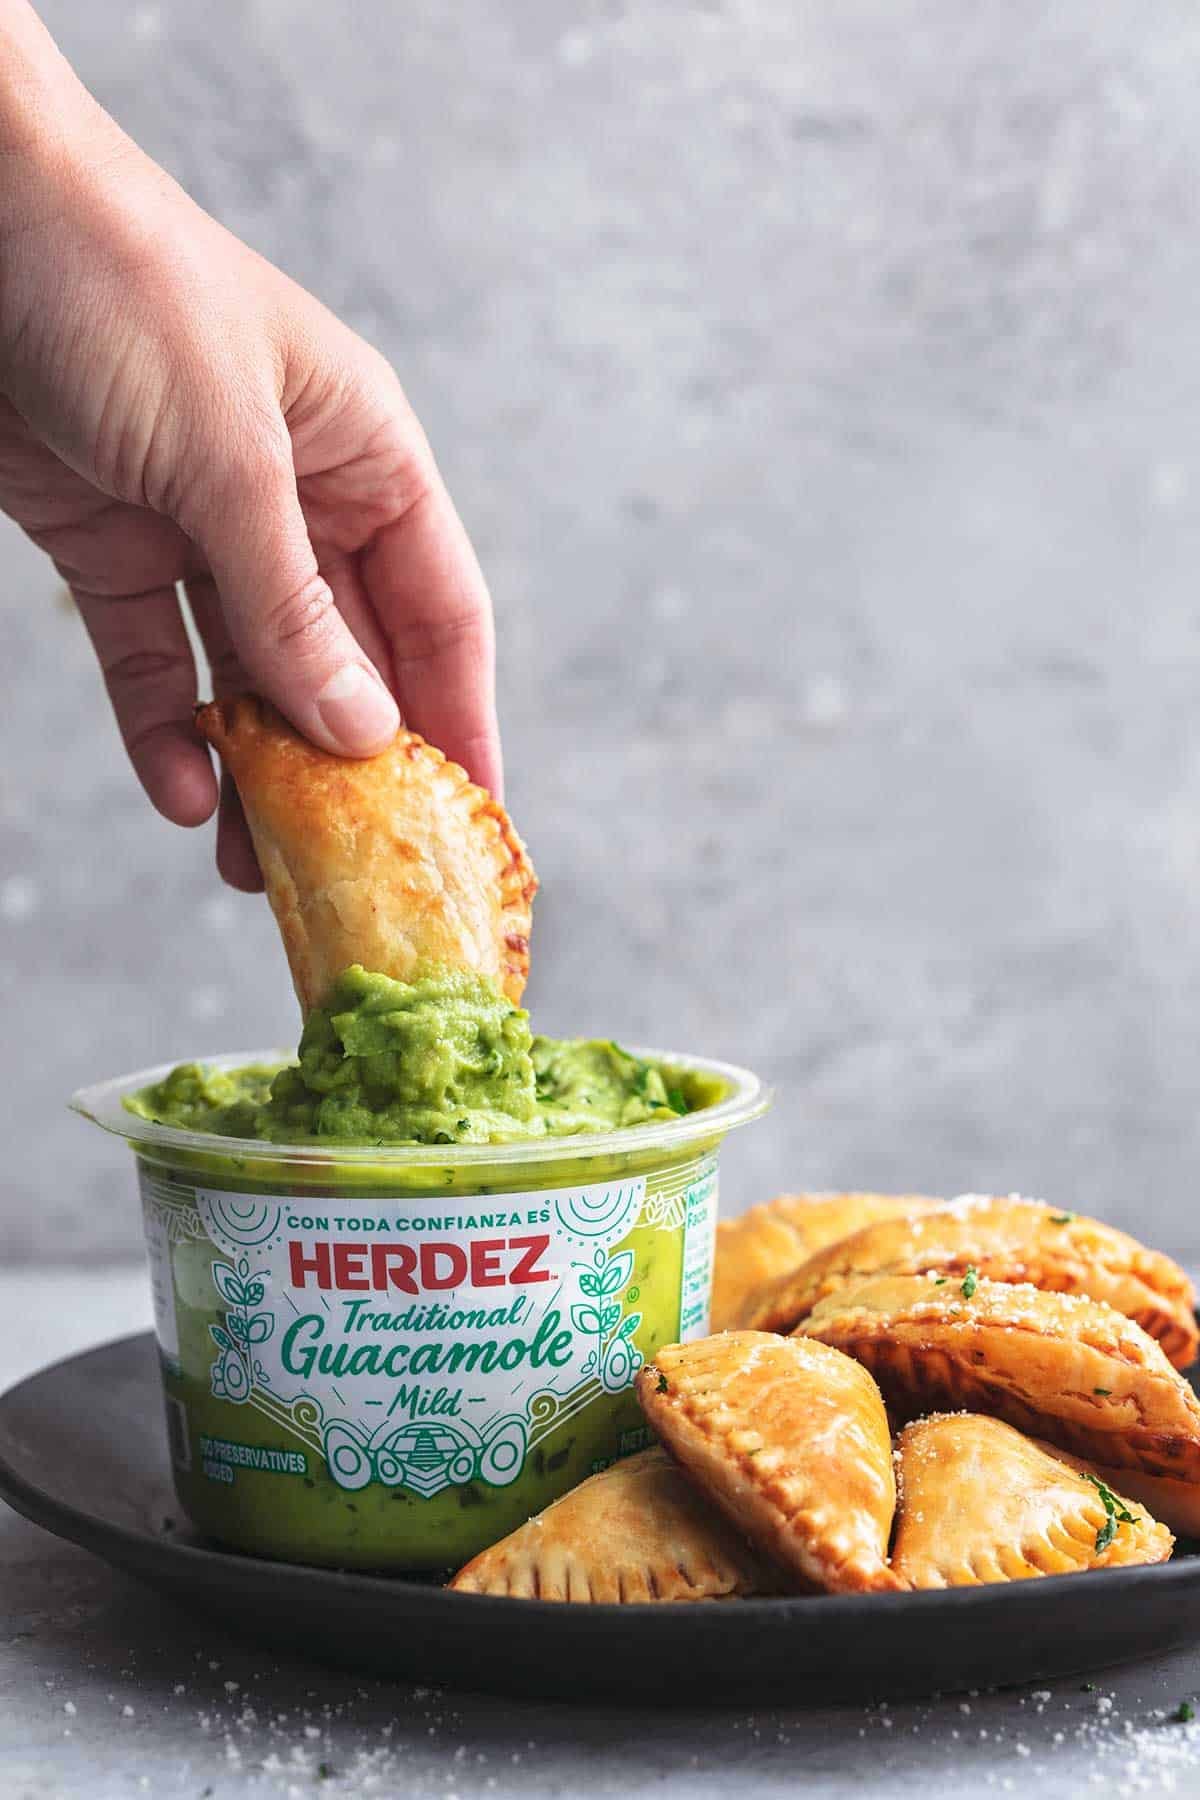 hand dipping empanada into container of Herdez guacamole